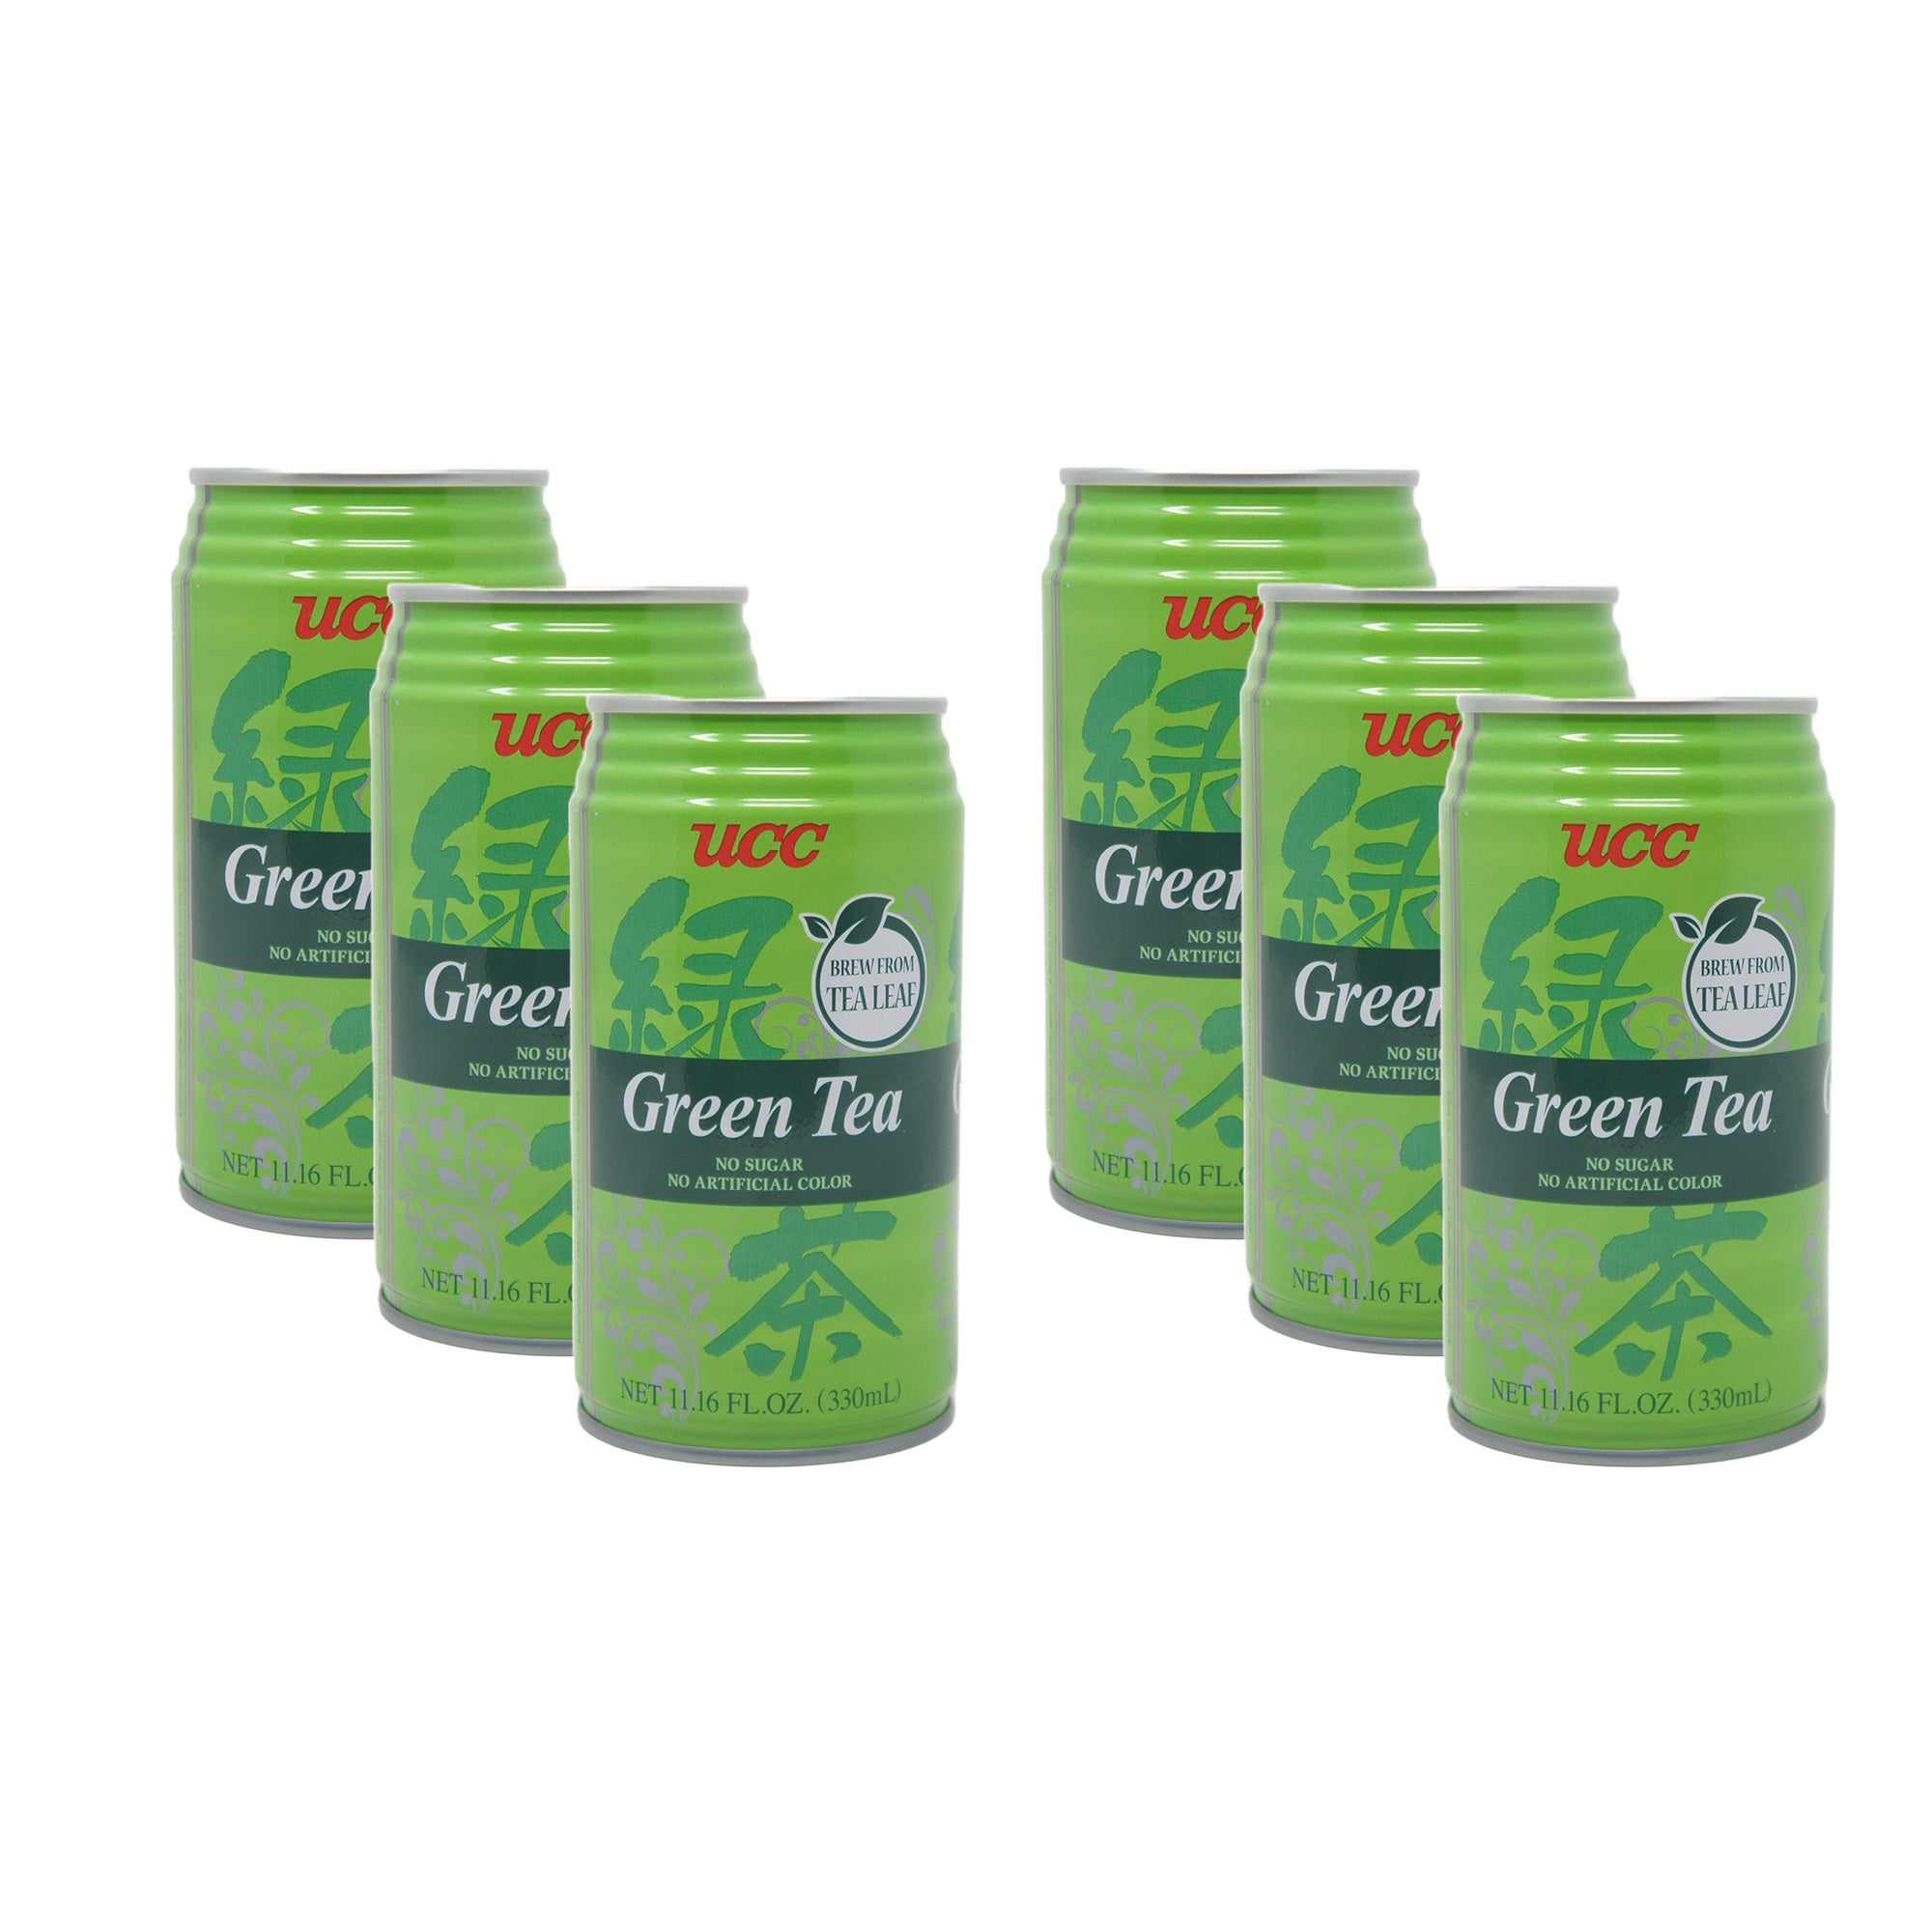 Ucc Green tea, No Sugar or Artificial Flavors, 11.16 fl oz, (6 Pack)